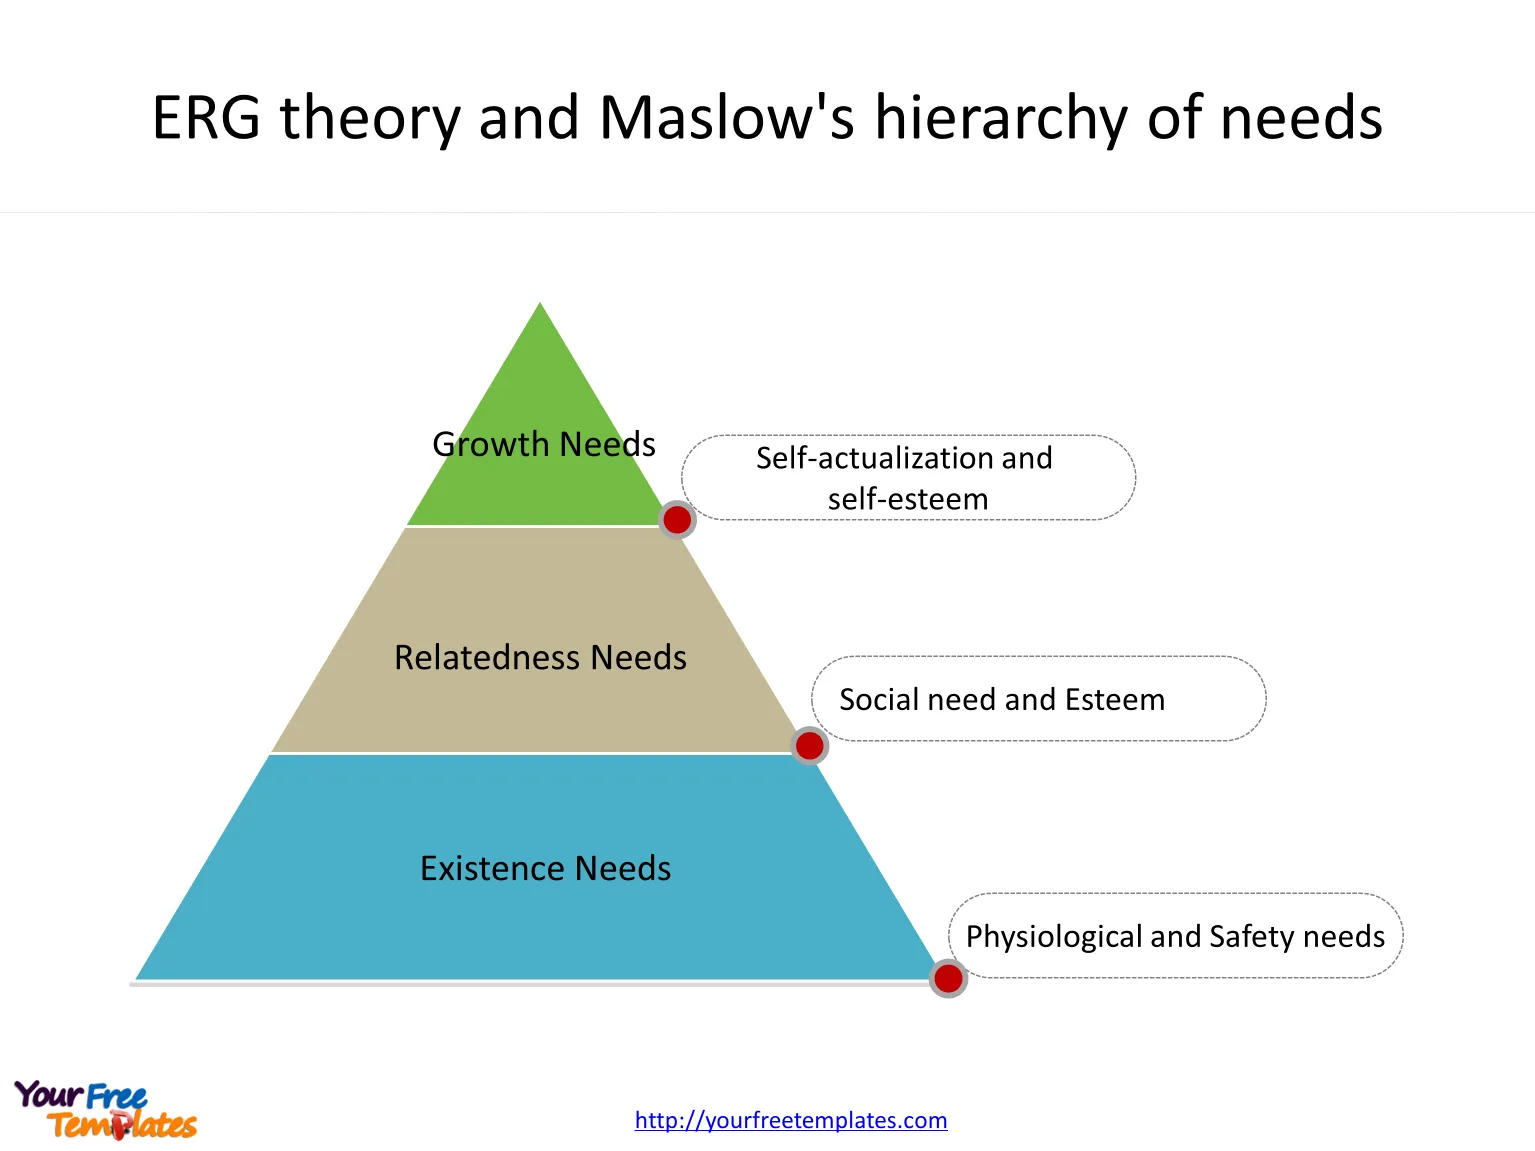 ERG theory of three levels